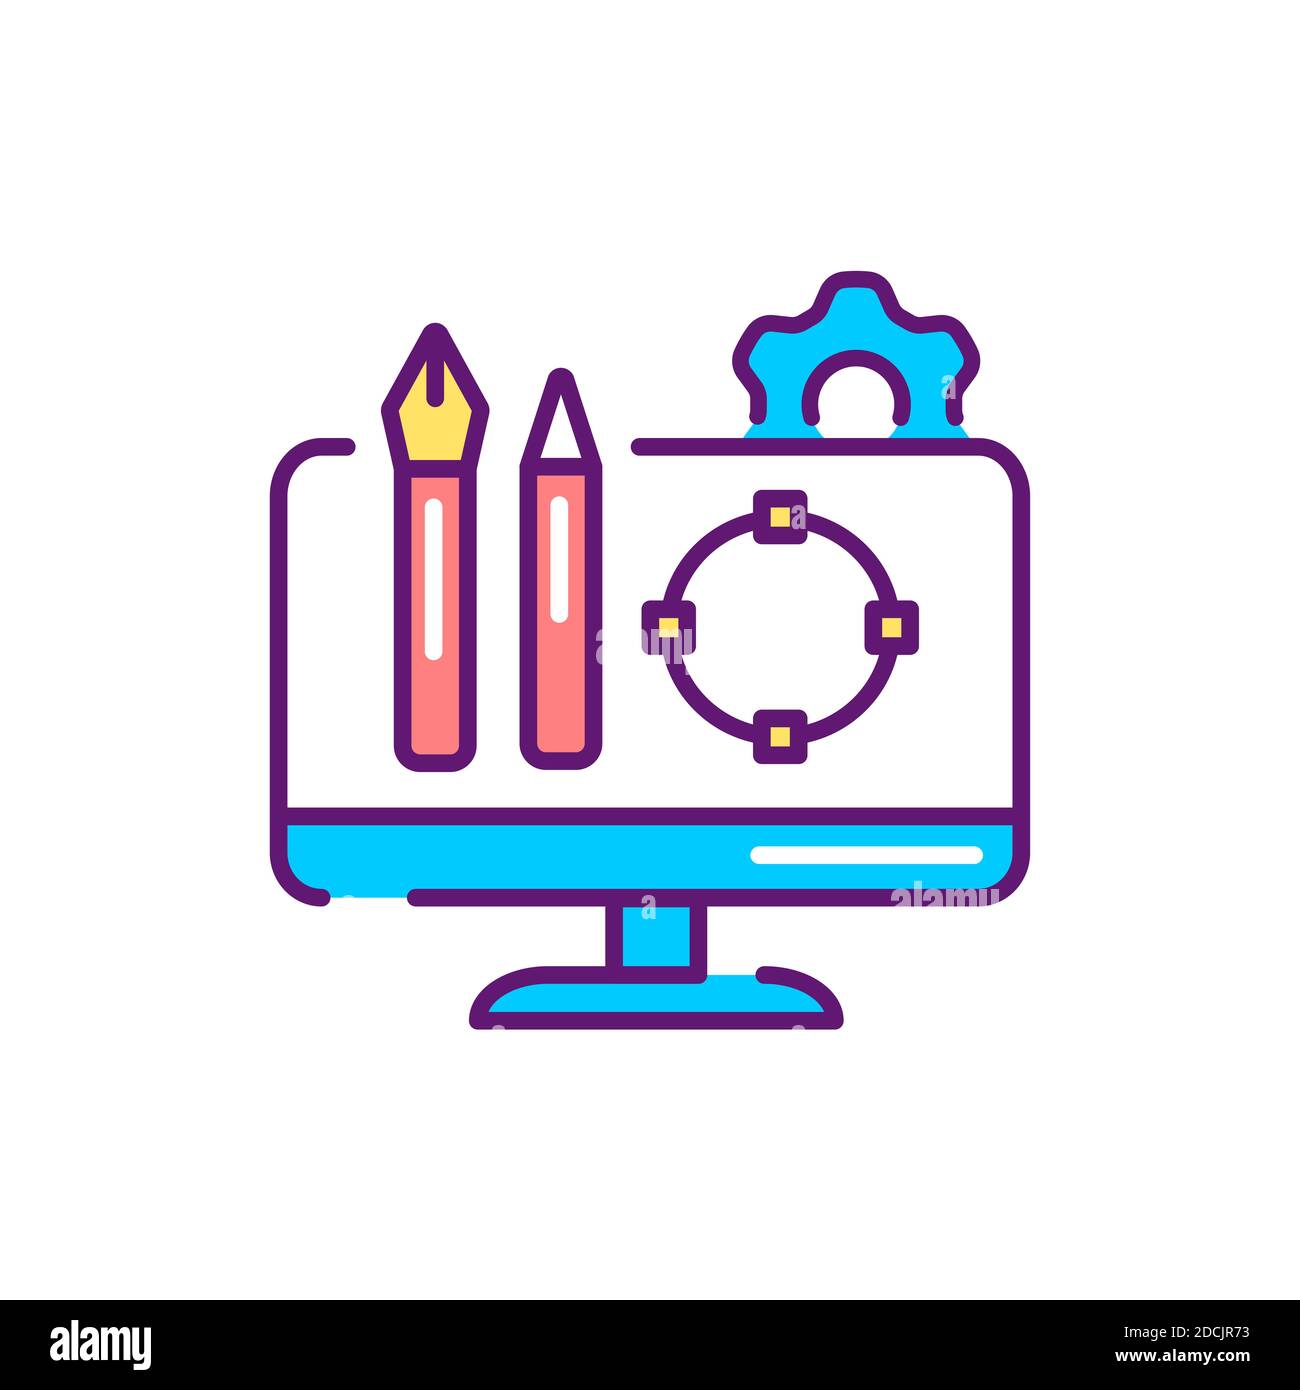 Graphic design color line icon. Pictogram for web page, mobile app, promo. Stock Photo